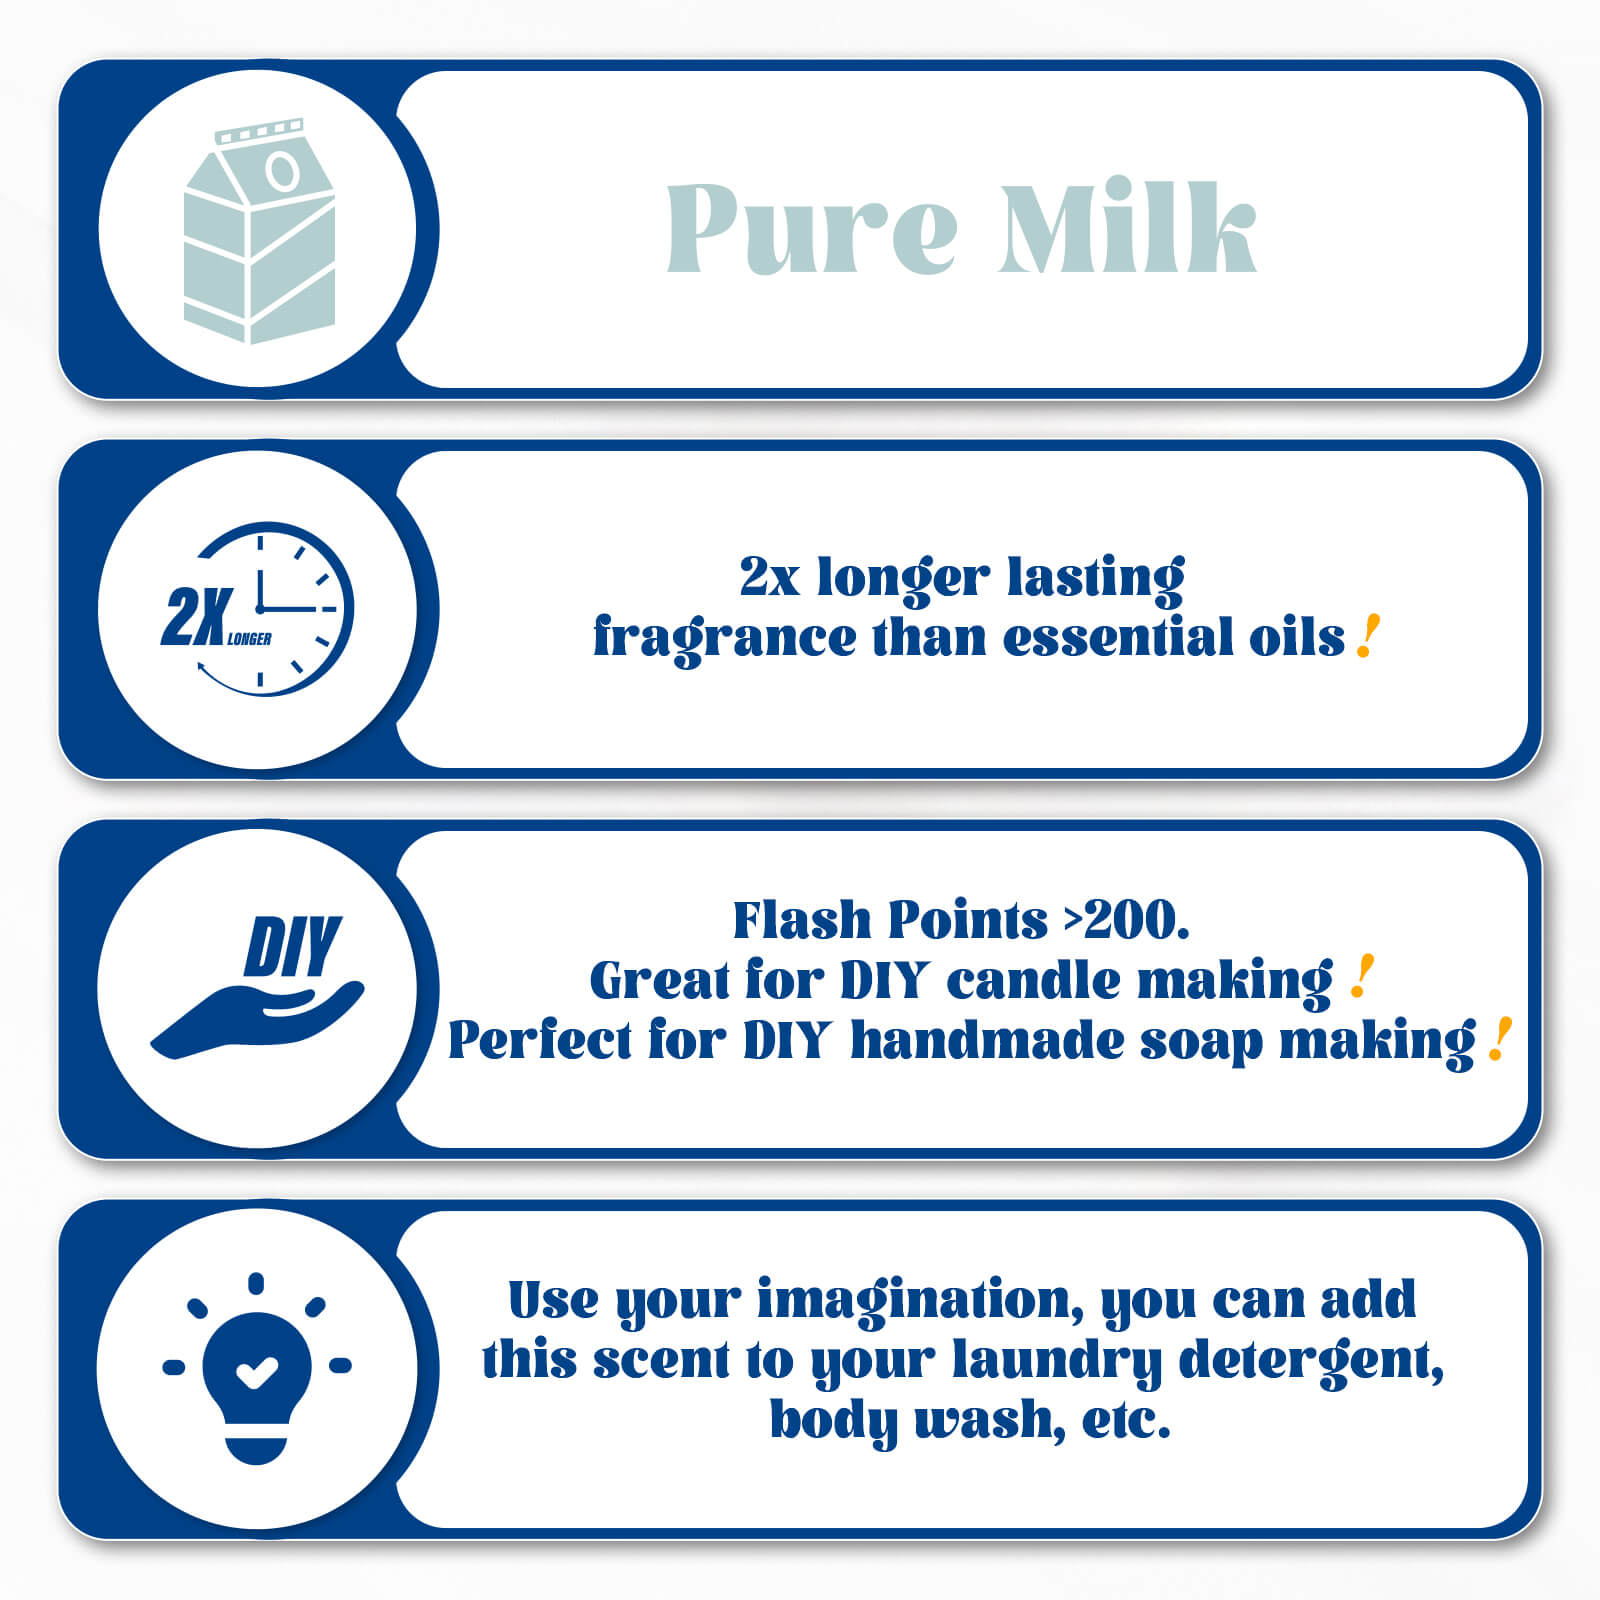 Pure Milk Fragrance Oil